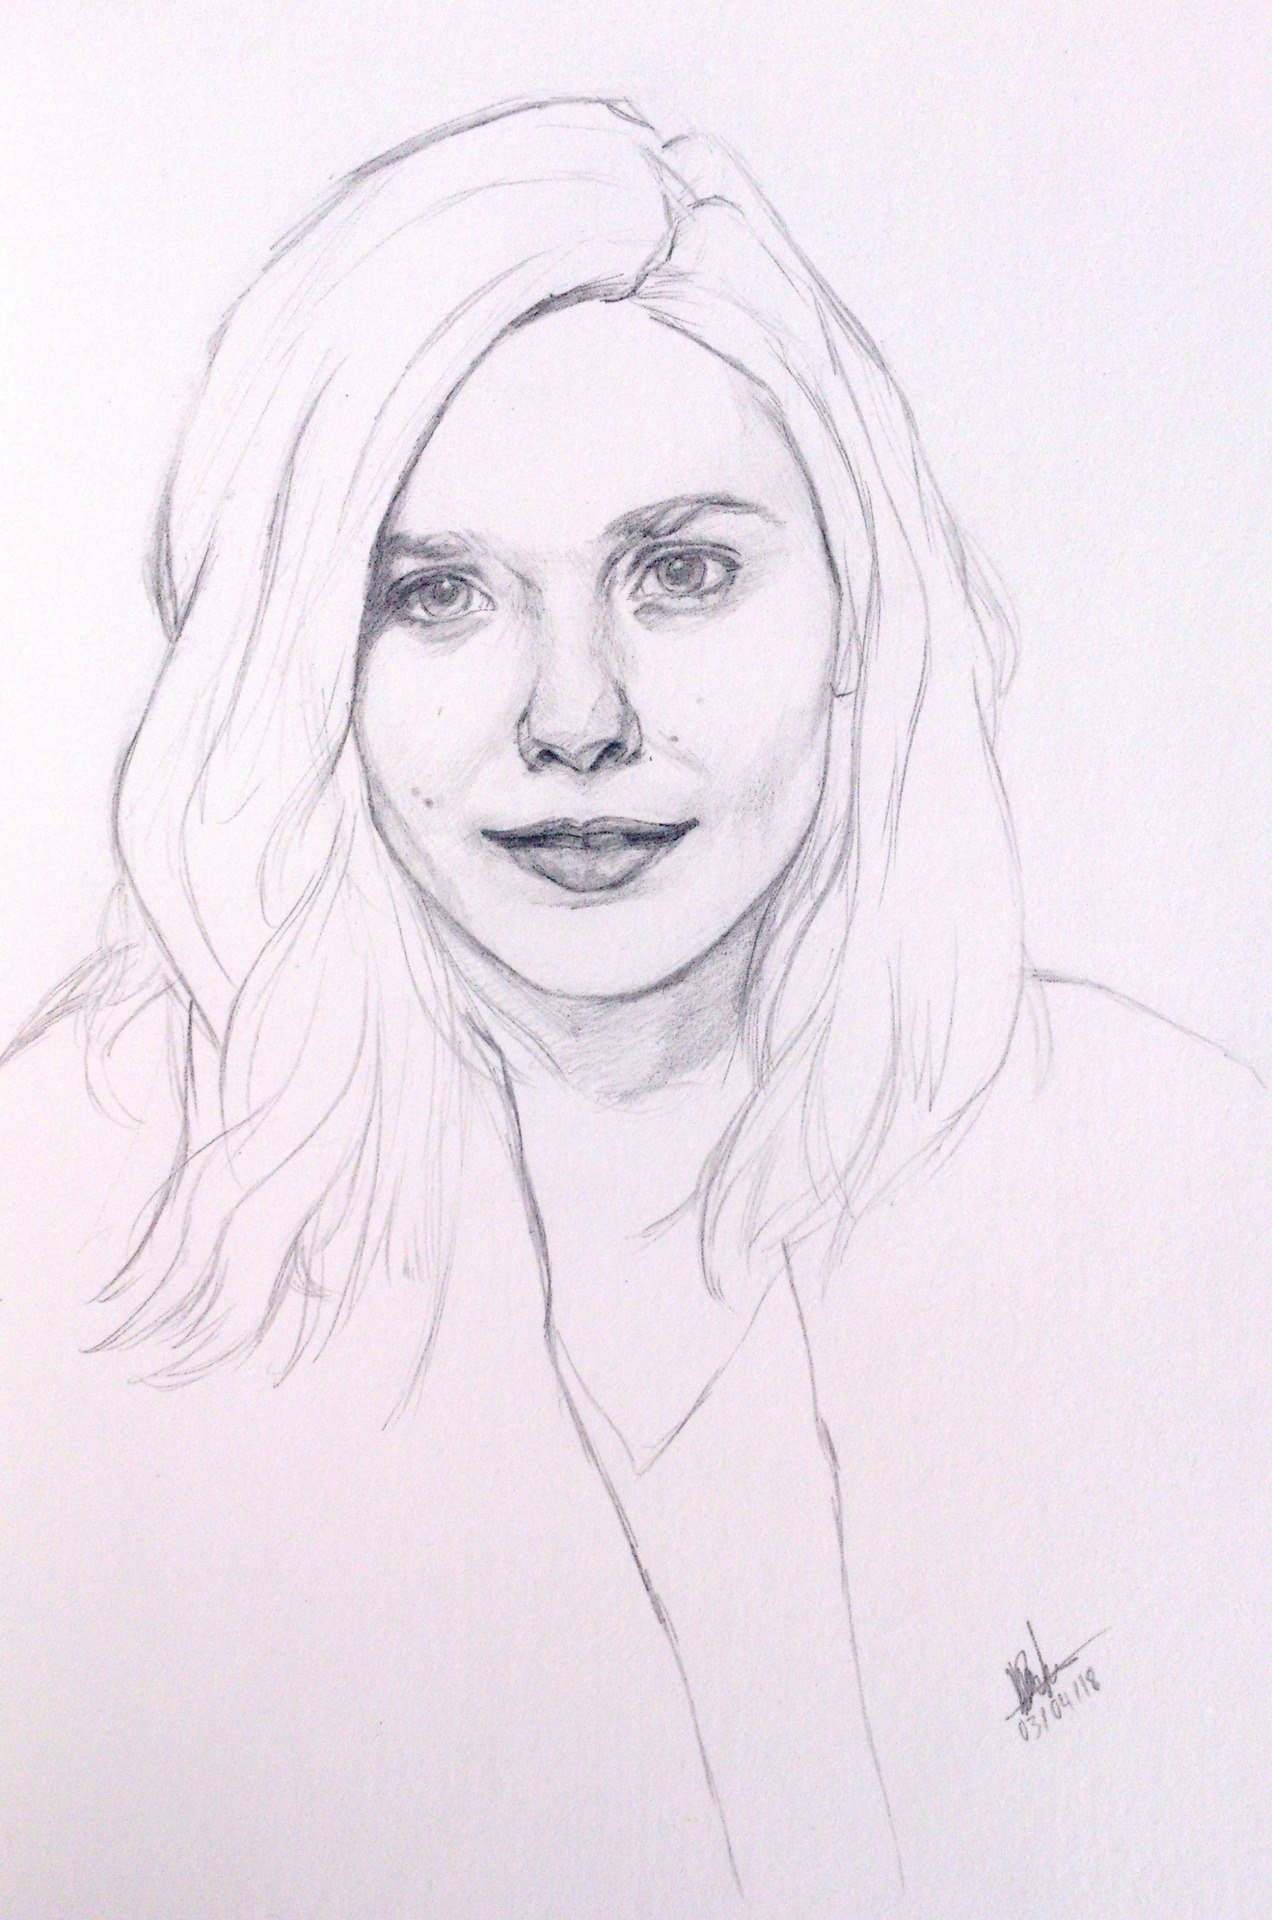 Elizabeth Olsen Sketch ♥ The Clumsy And Shy 